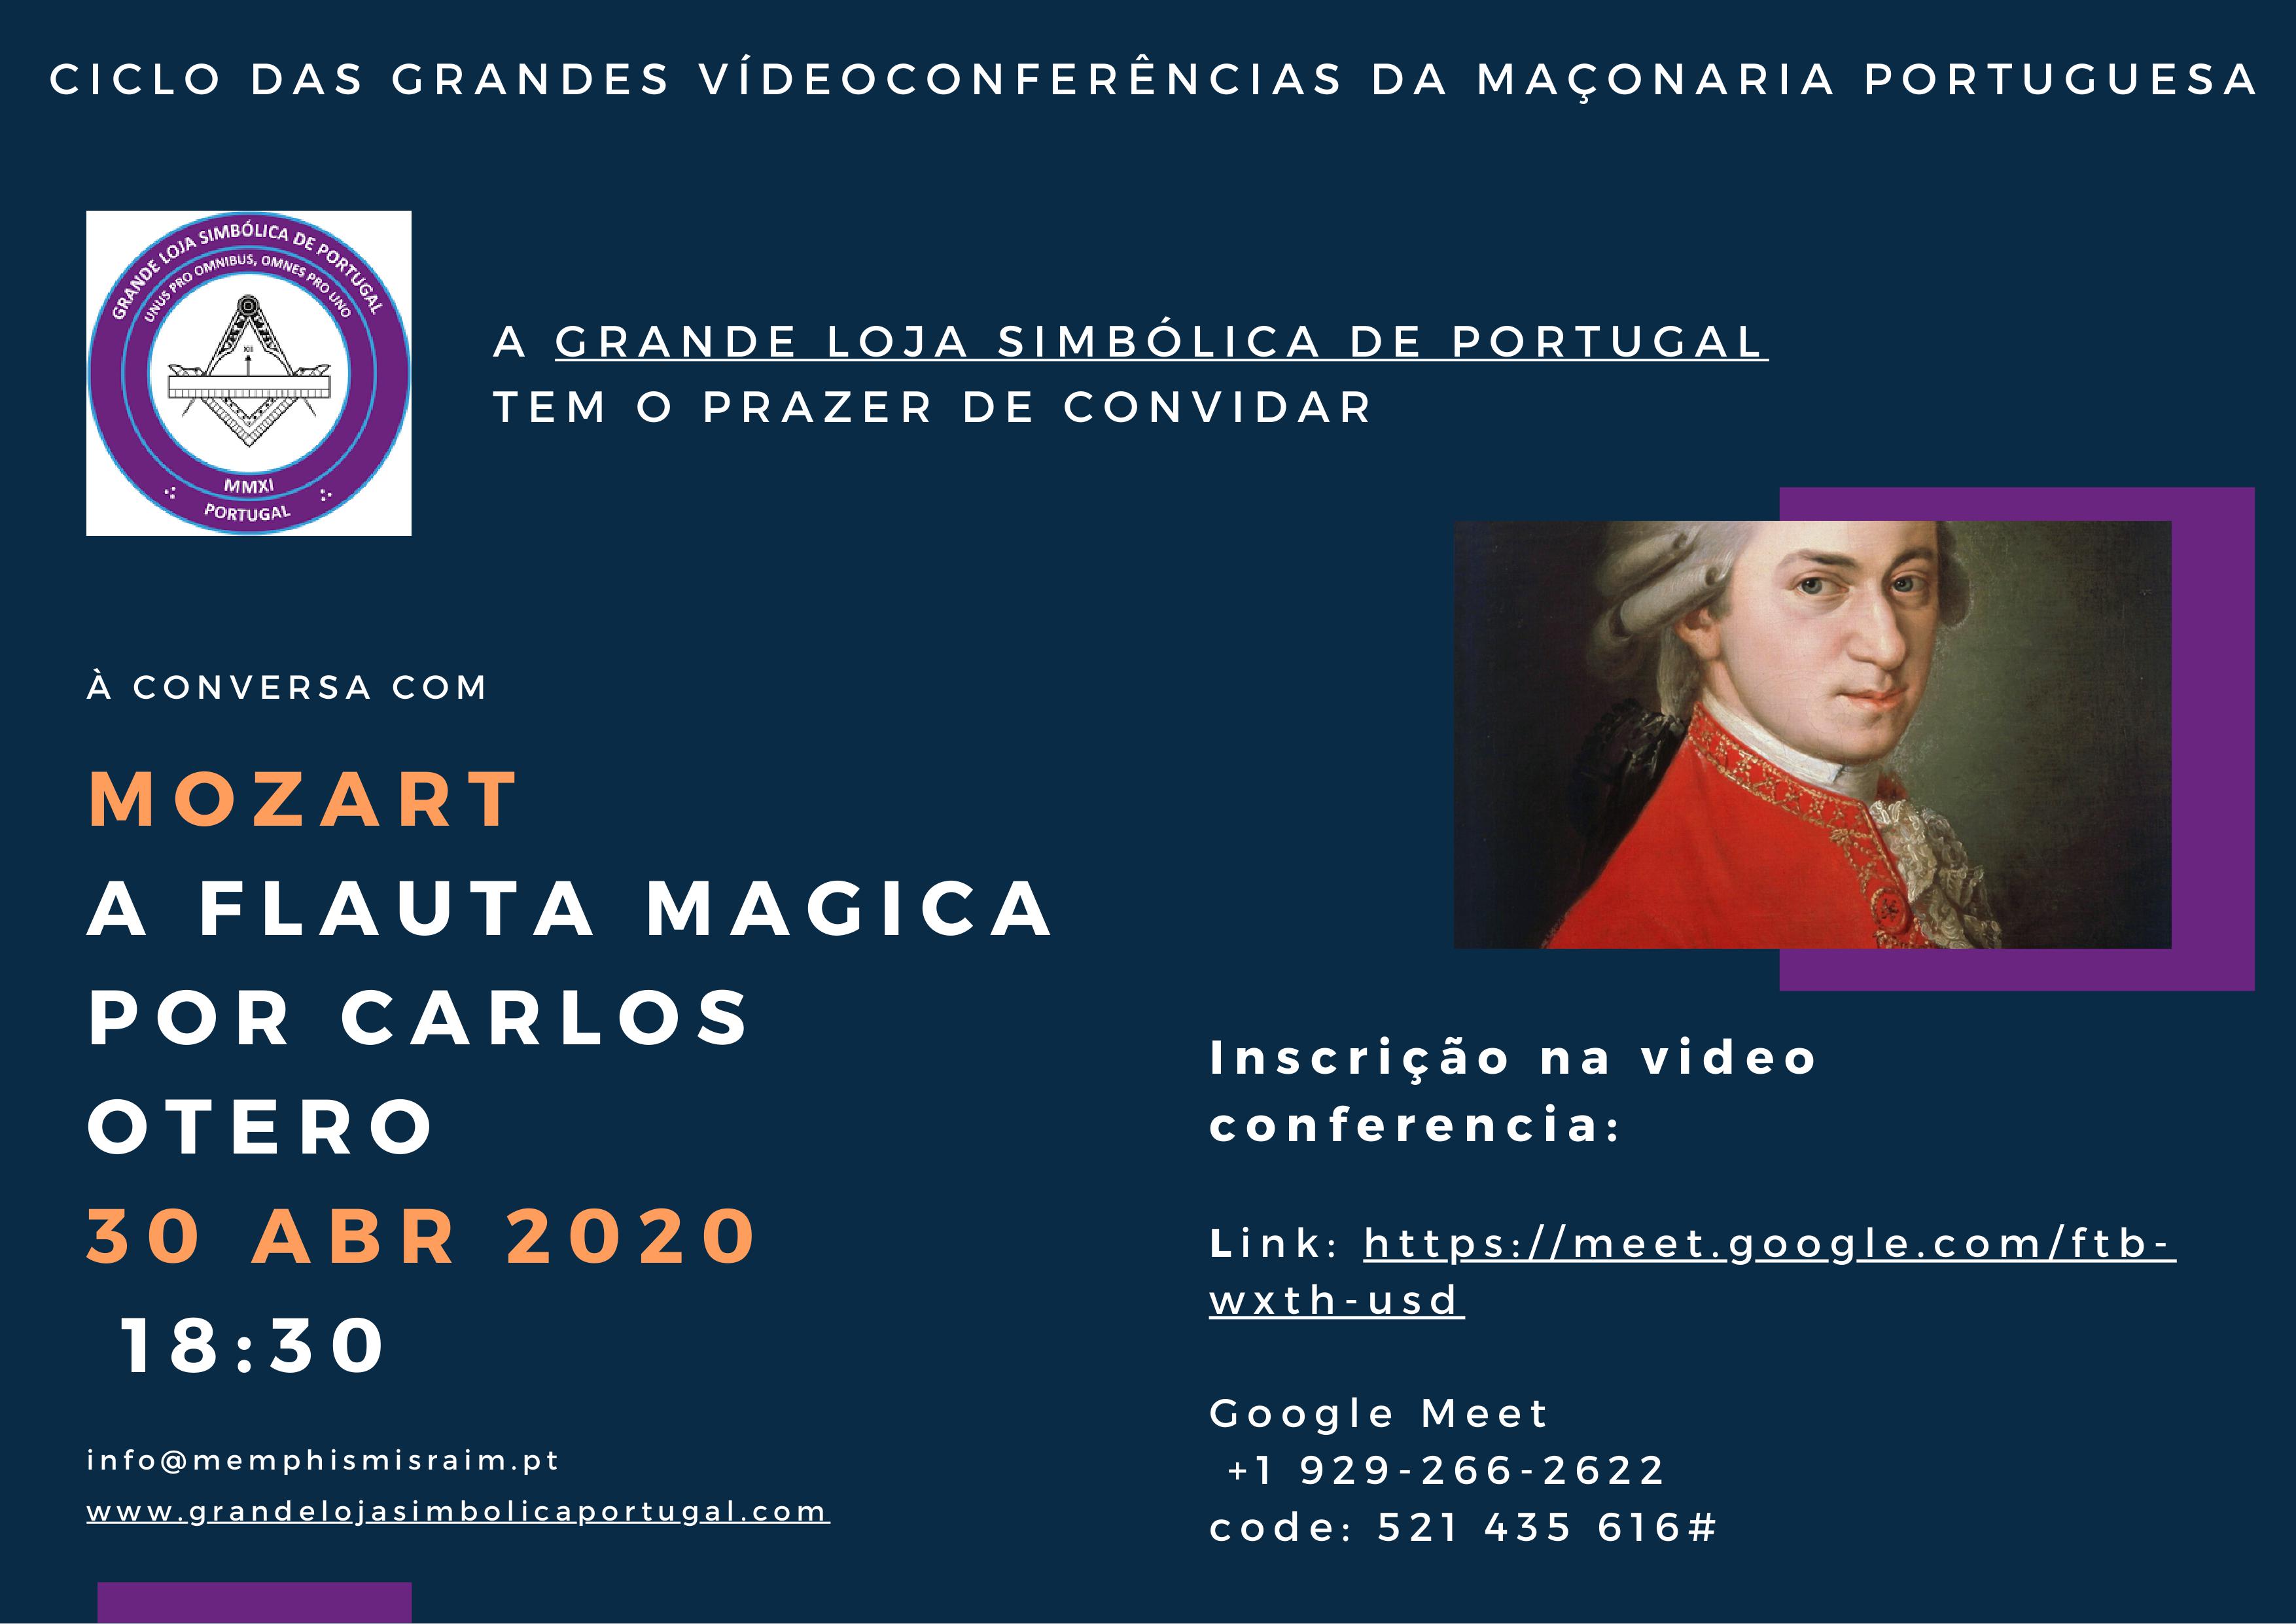 Ciclo Grandes Videoconferências da Maçonaria Portuguesa Á conversa com Mozart Flauta Magica.pg